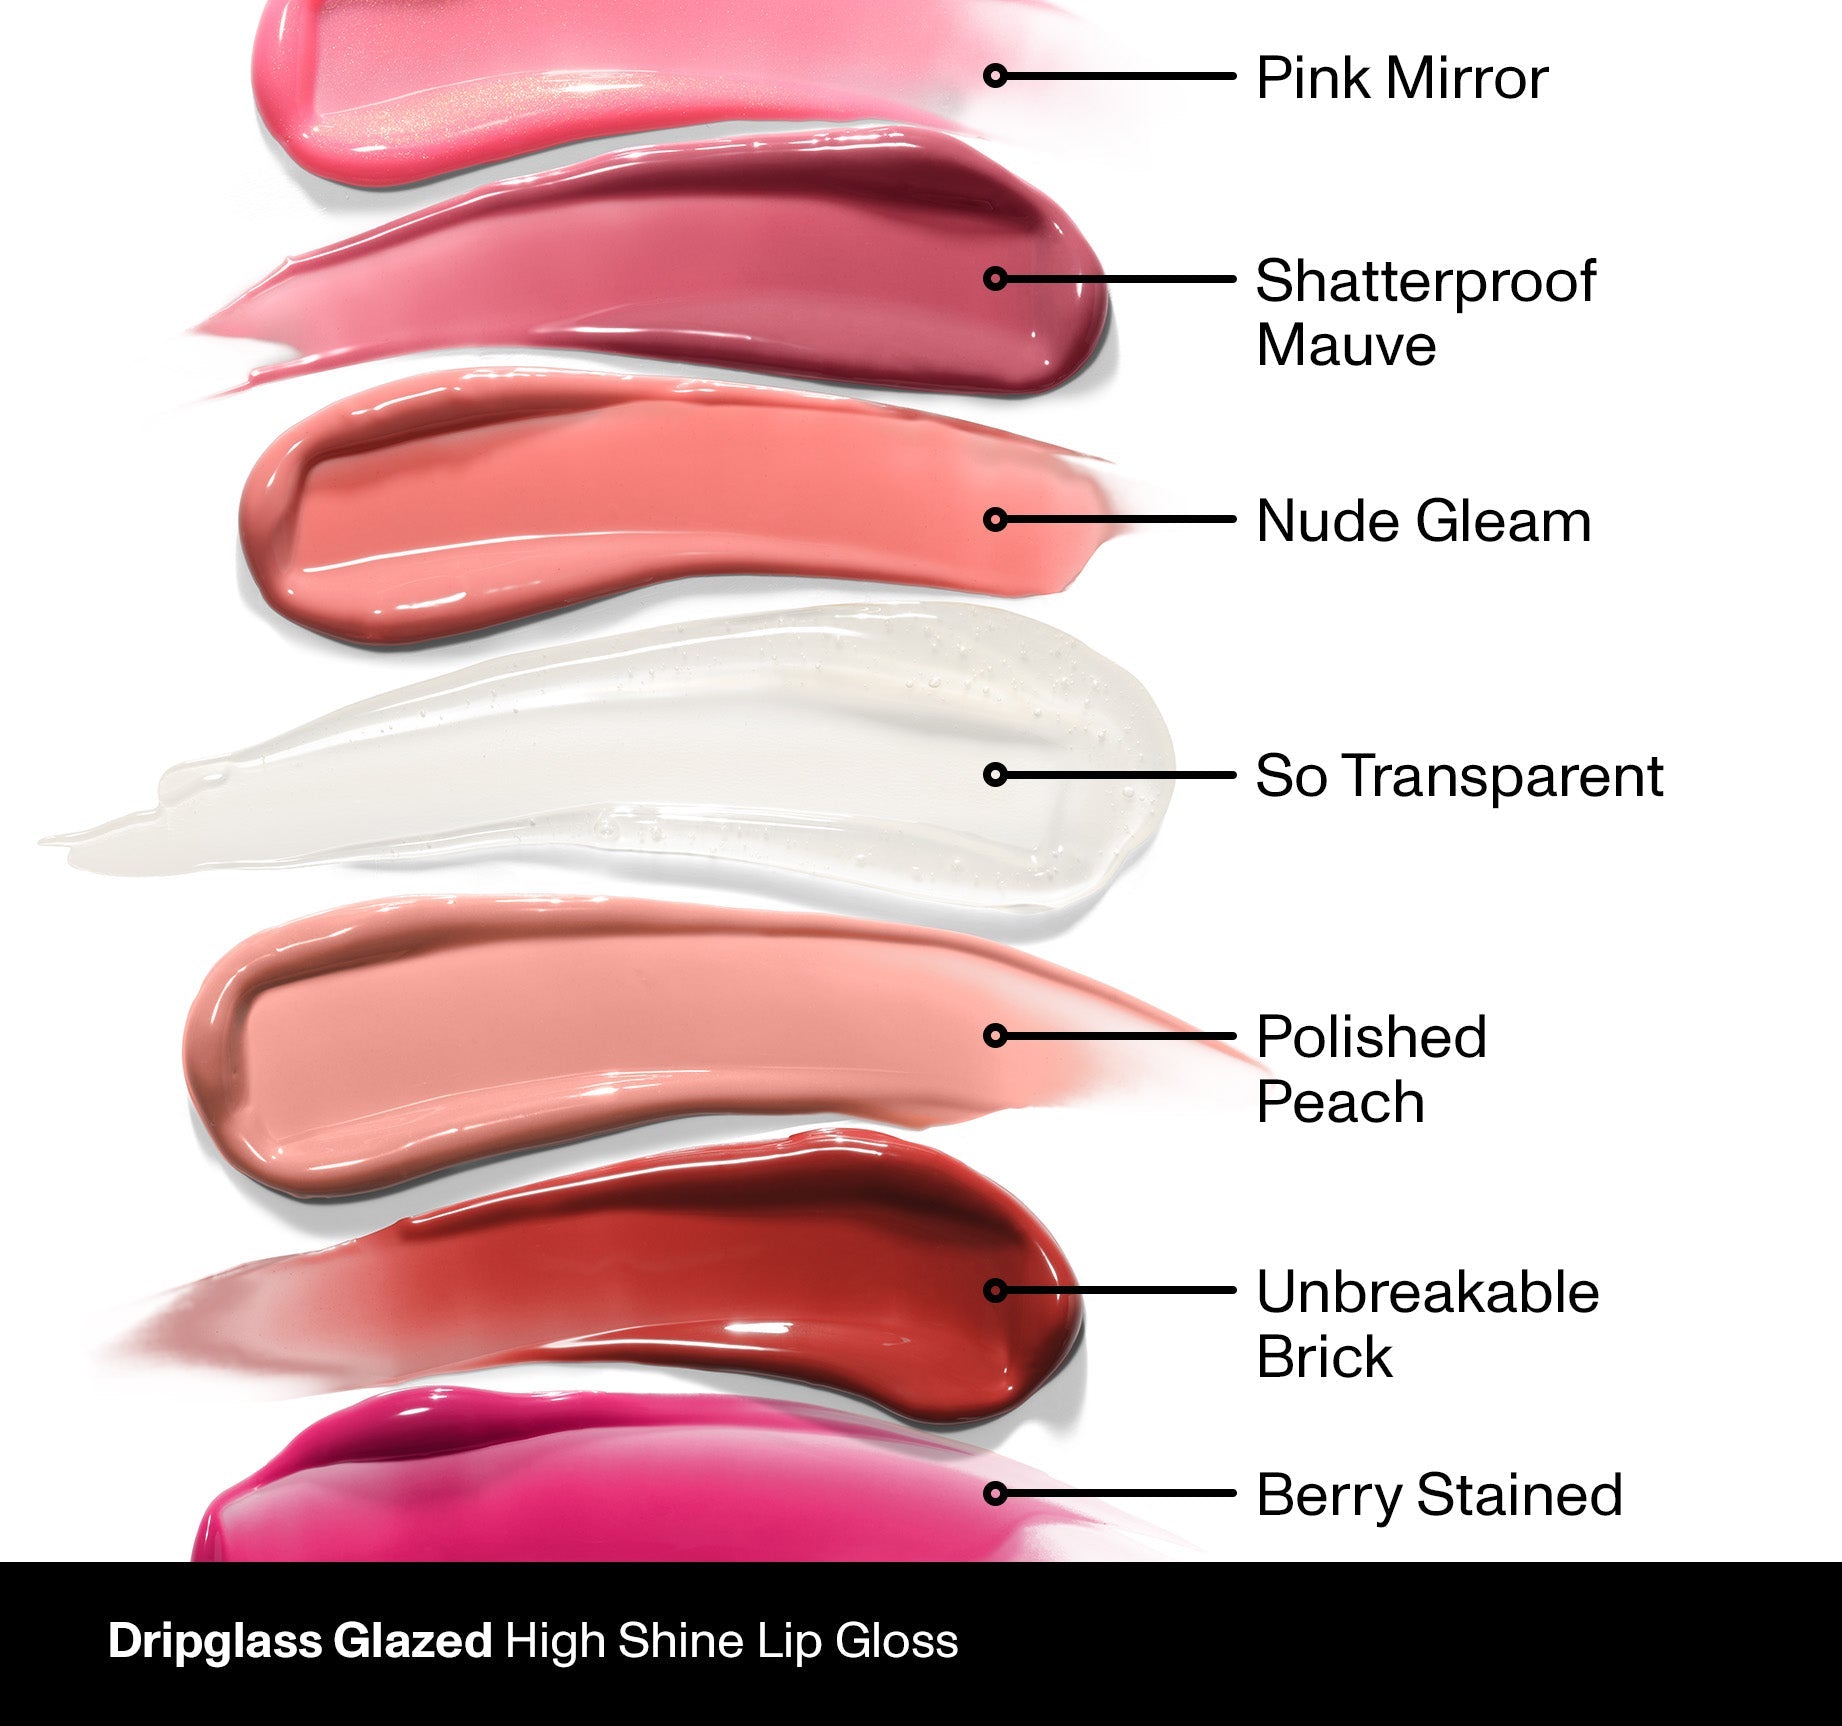 Dripglass Glazed High Shine Lip Gloss - So Transparent - Image 6